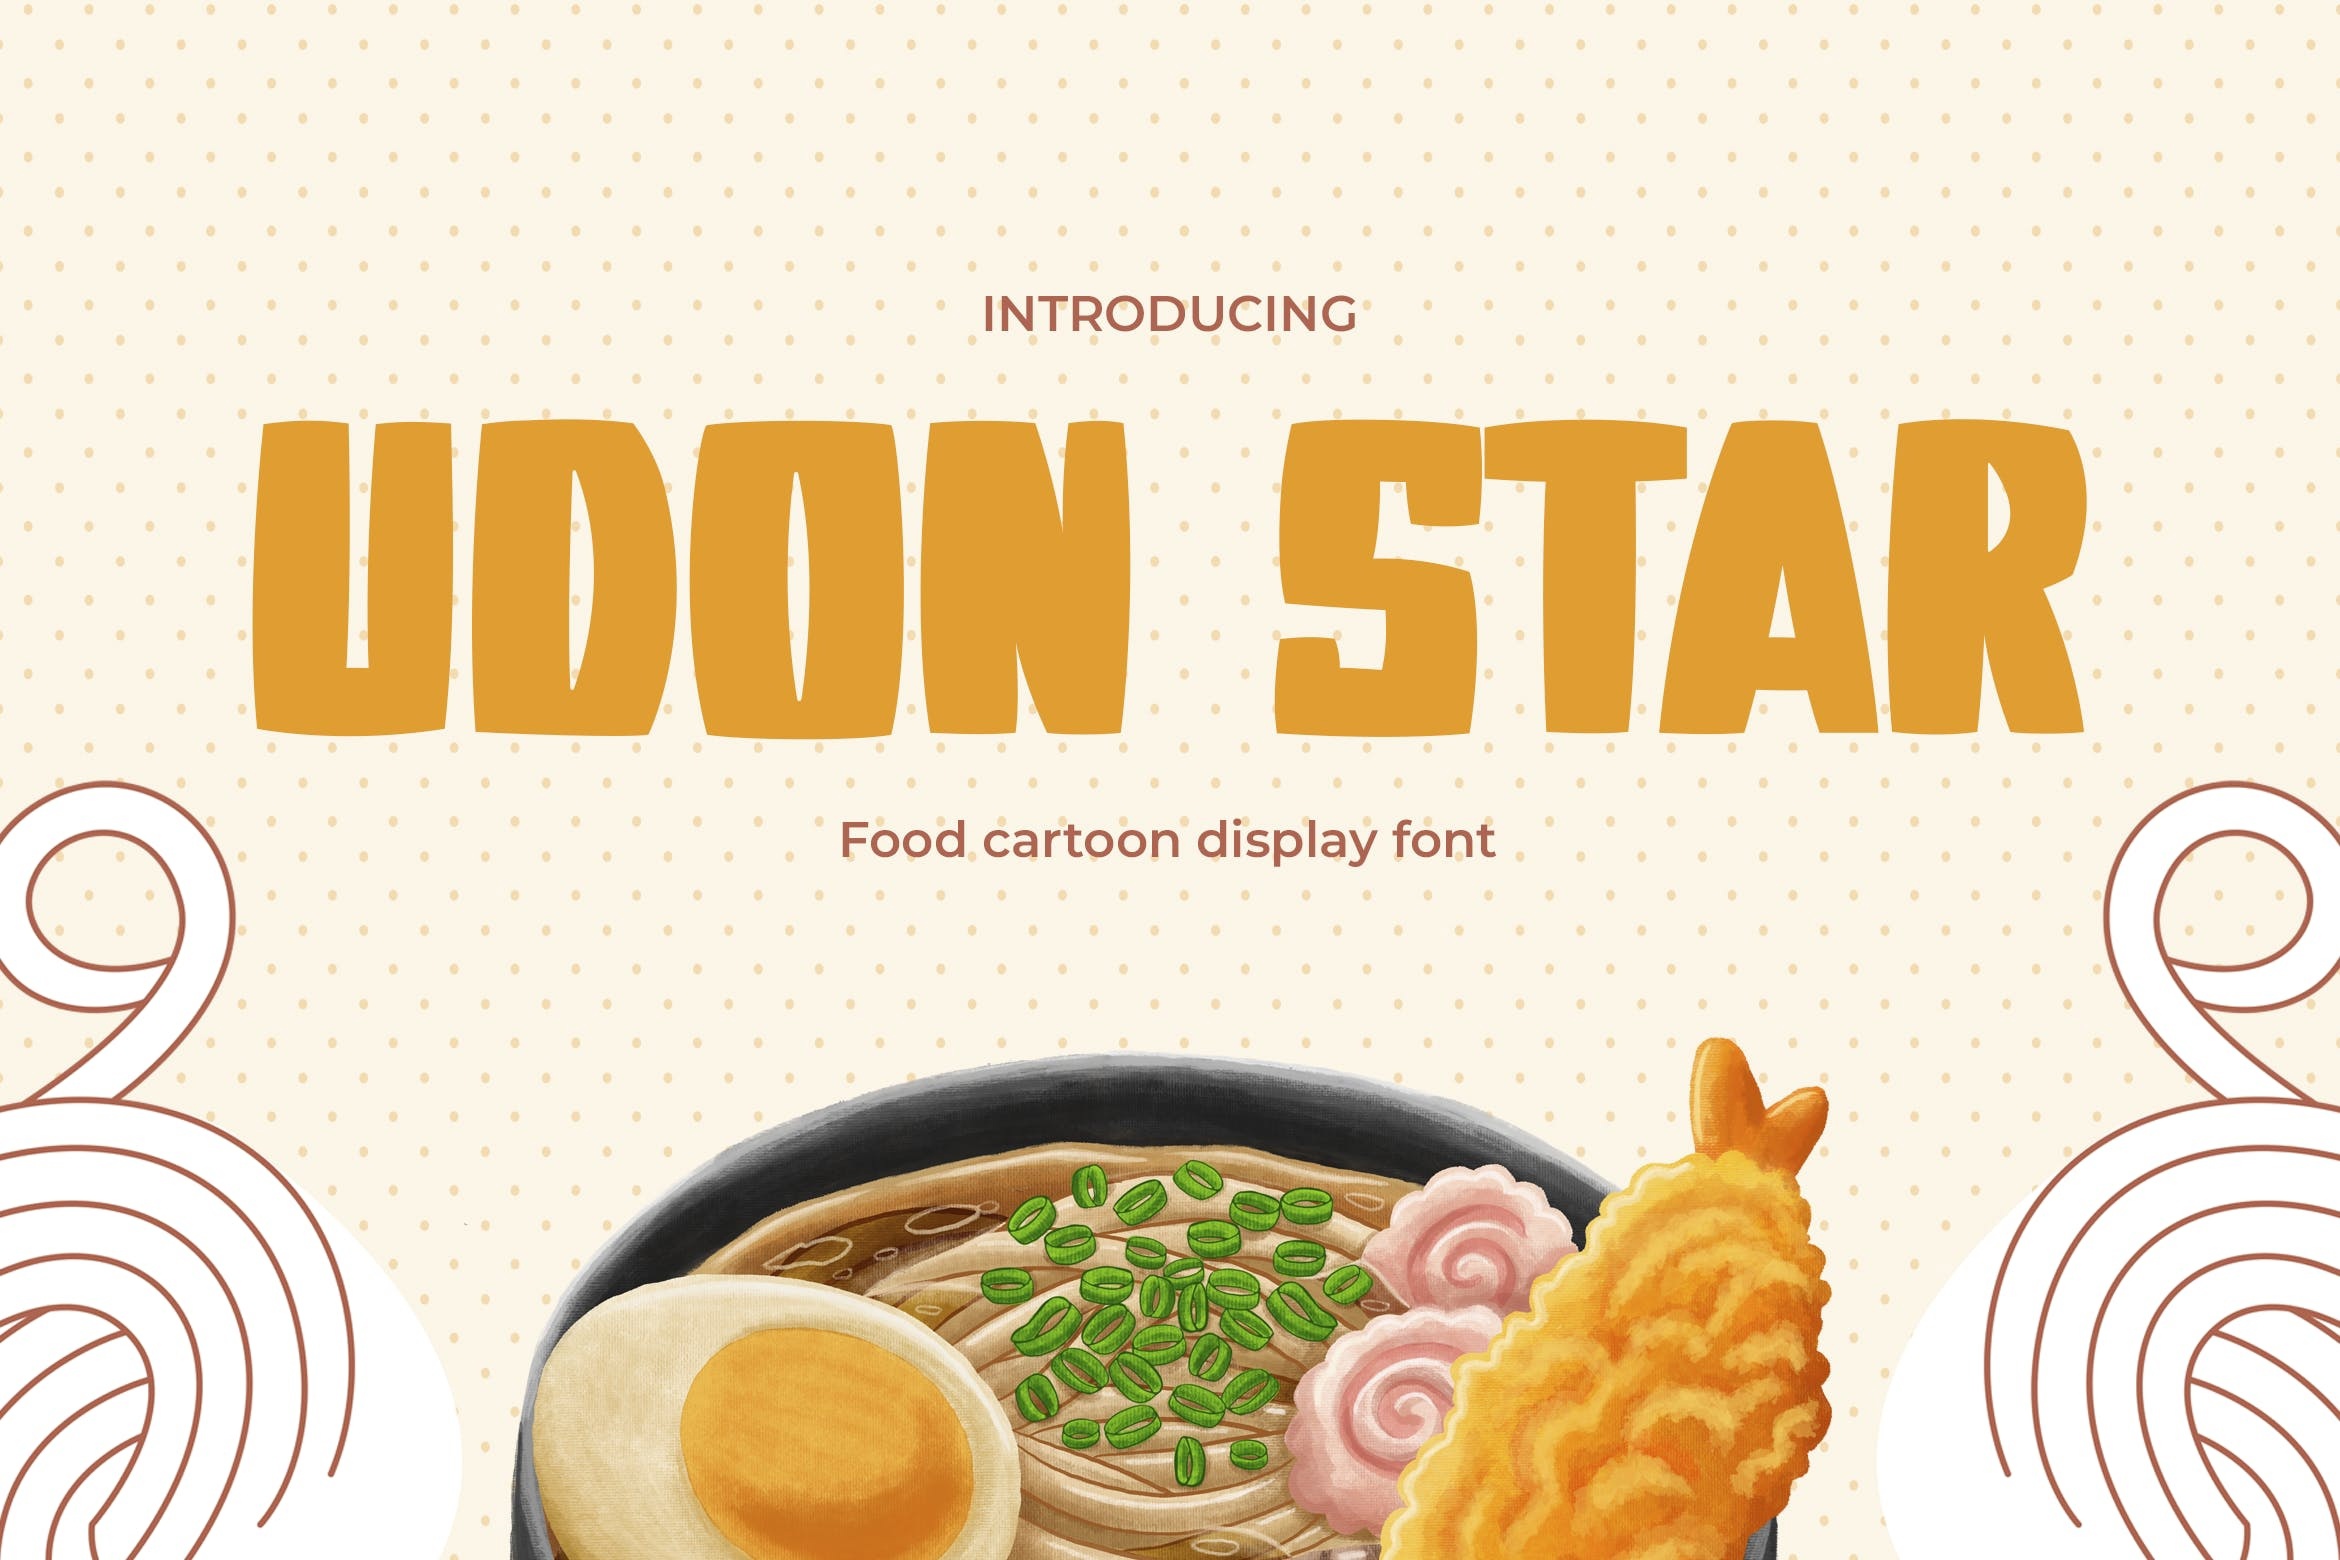 Udon Star